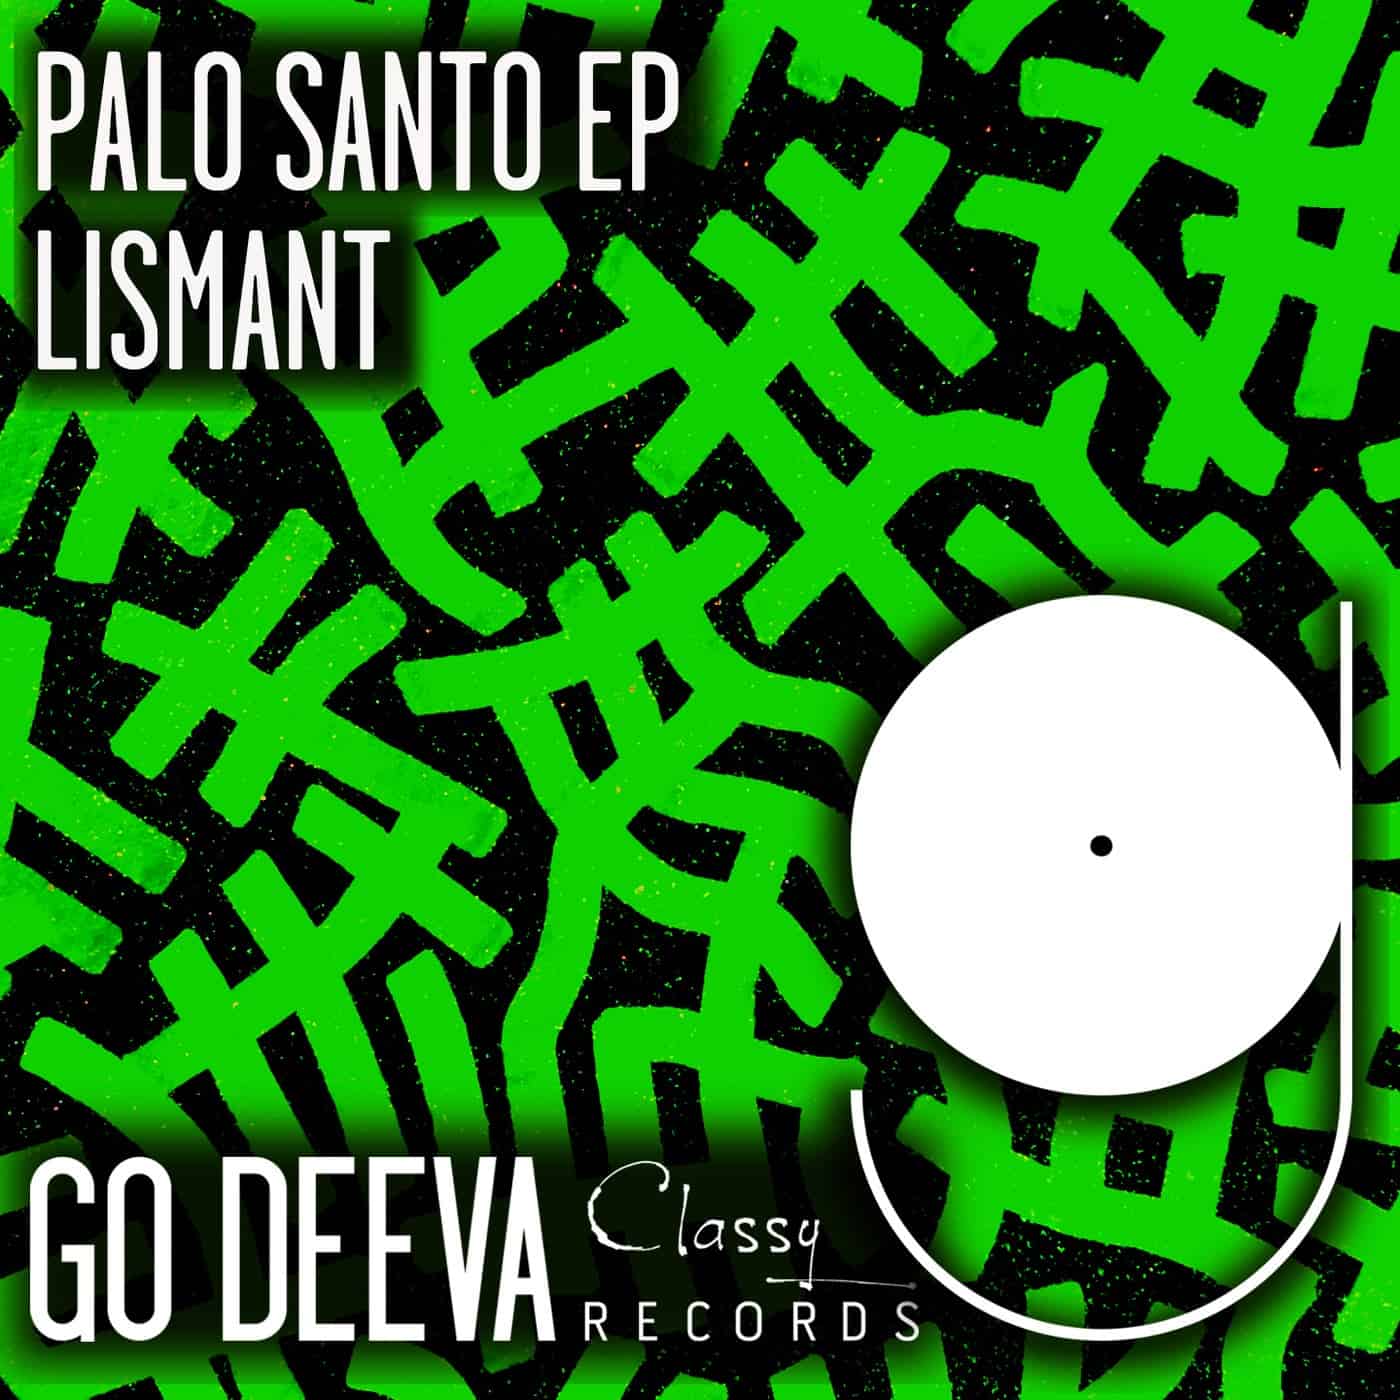 Download Lismant - Palo Santo Ep on Electrobuzz